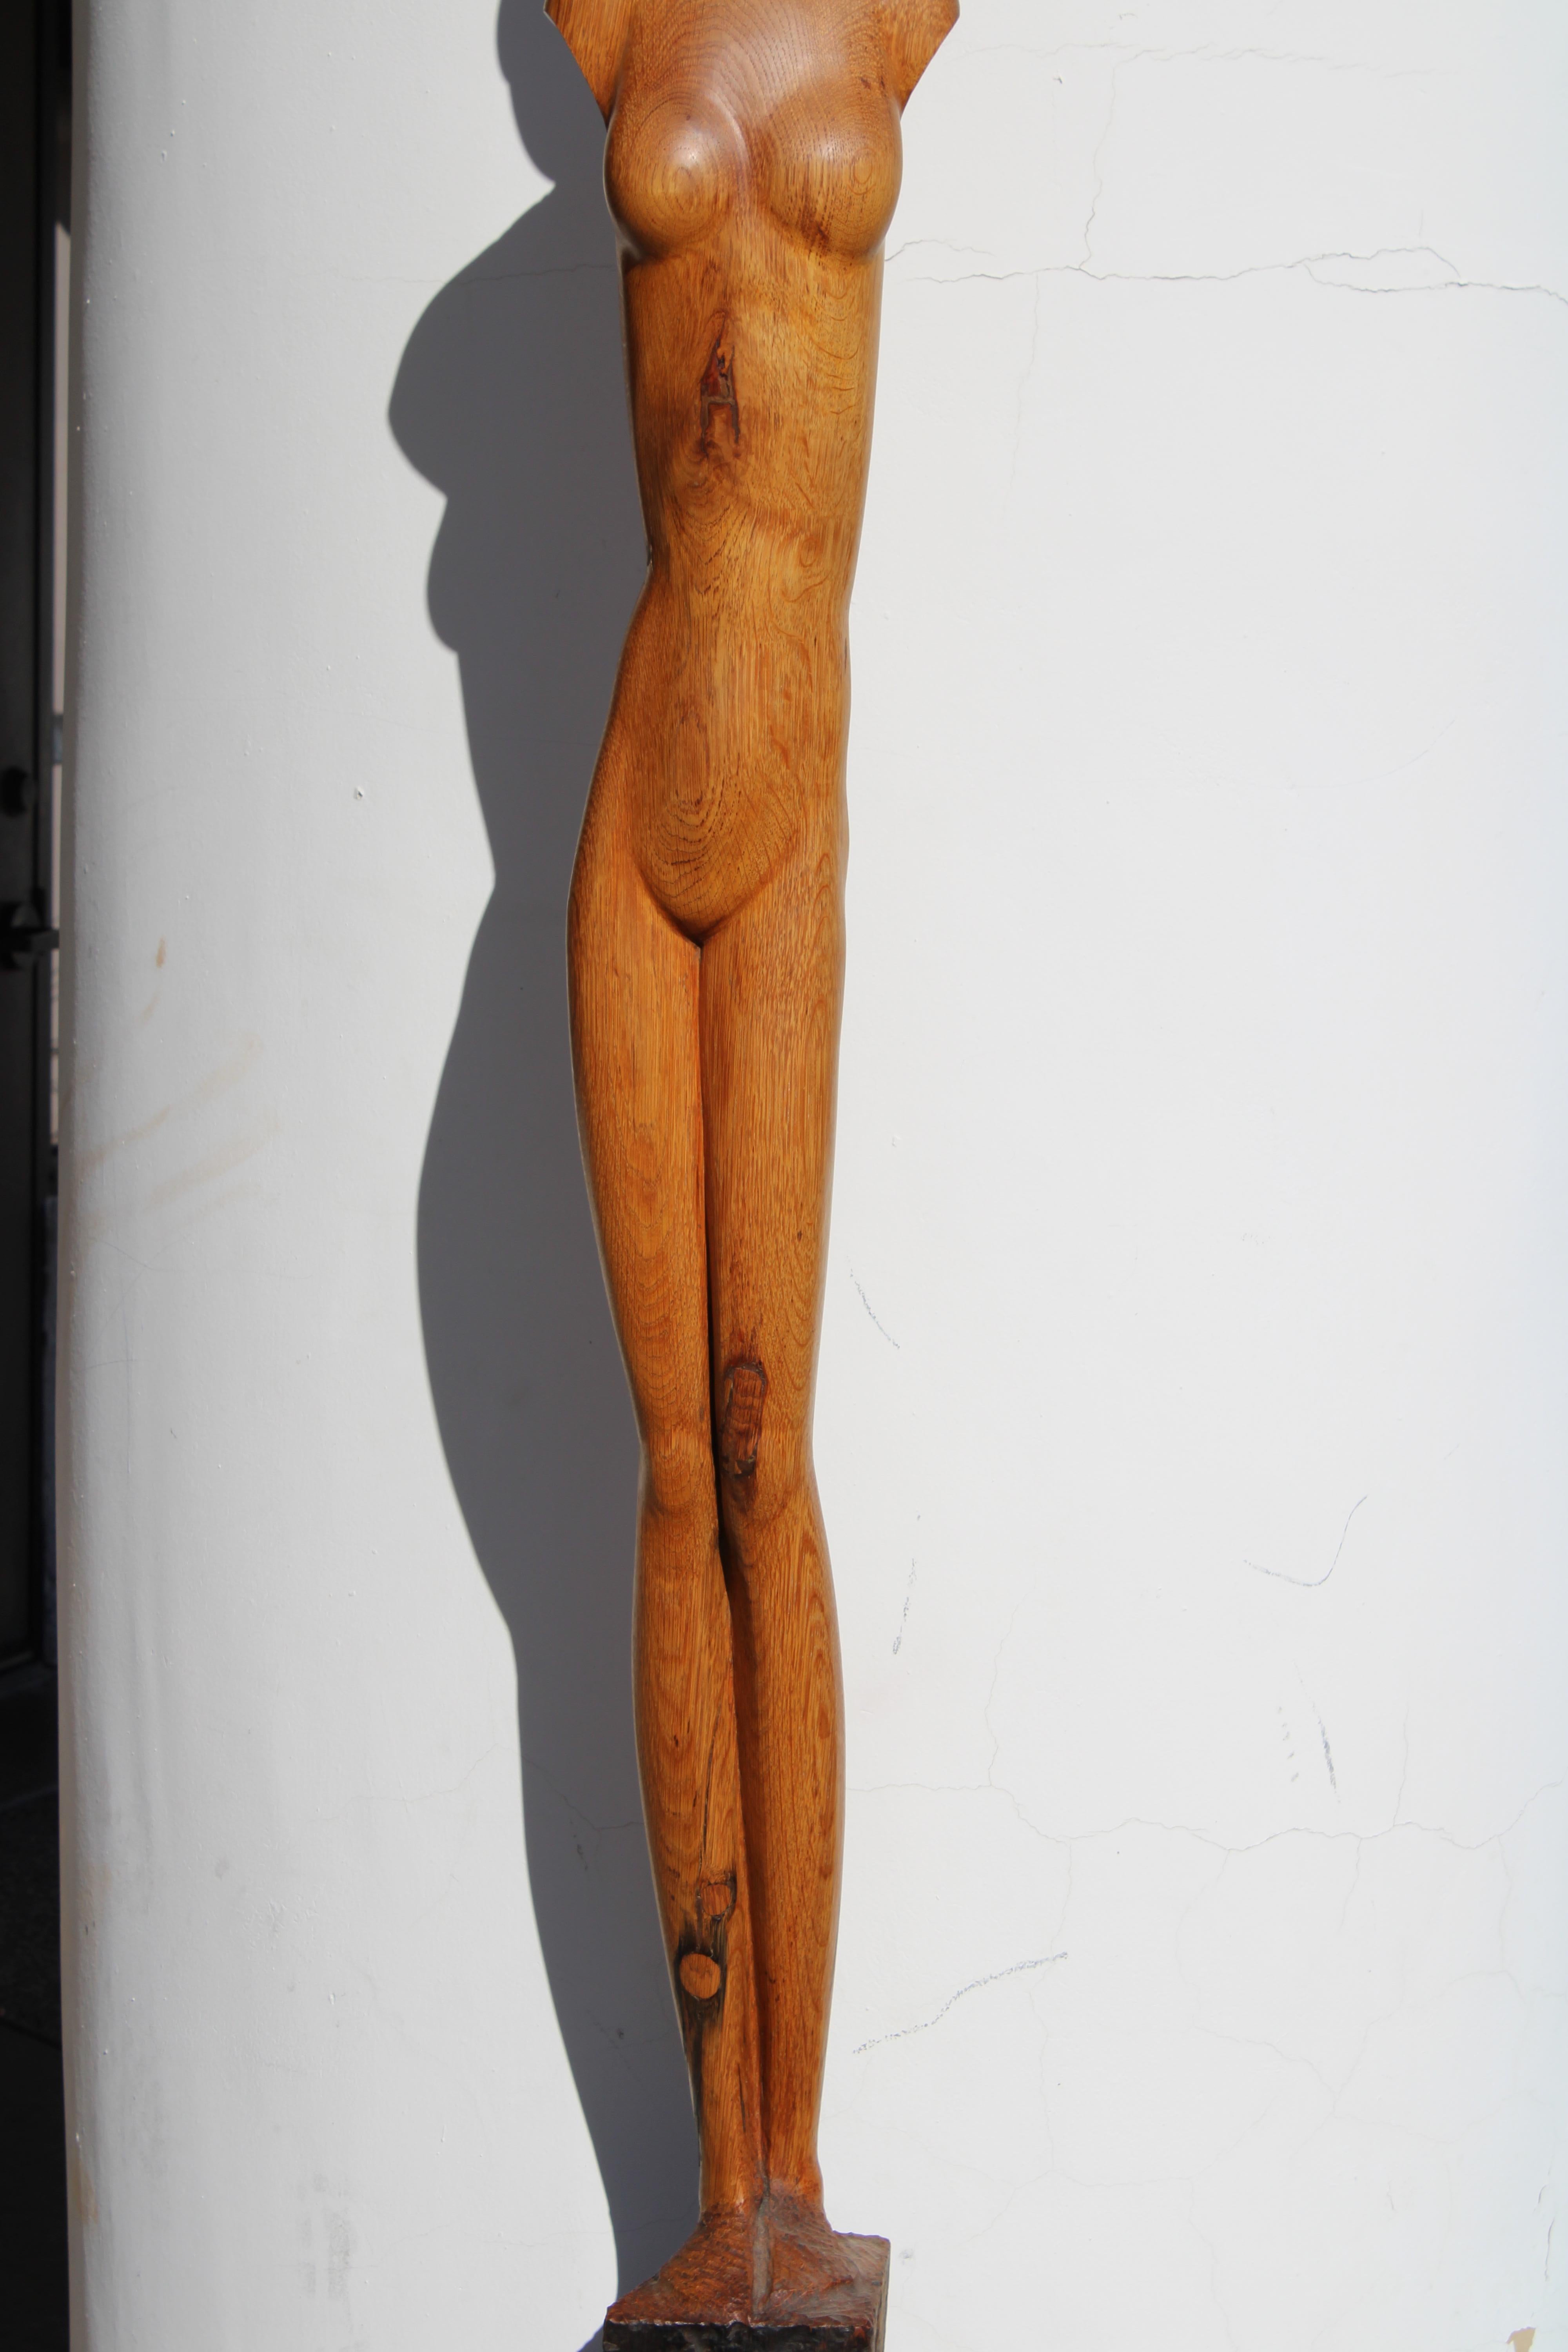 Wood Six Foot Art Deco Figurative Woman Sculpture For Sale